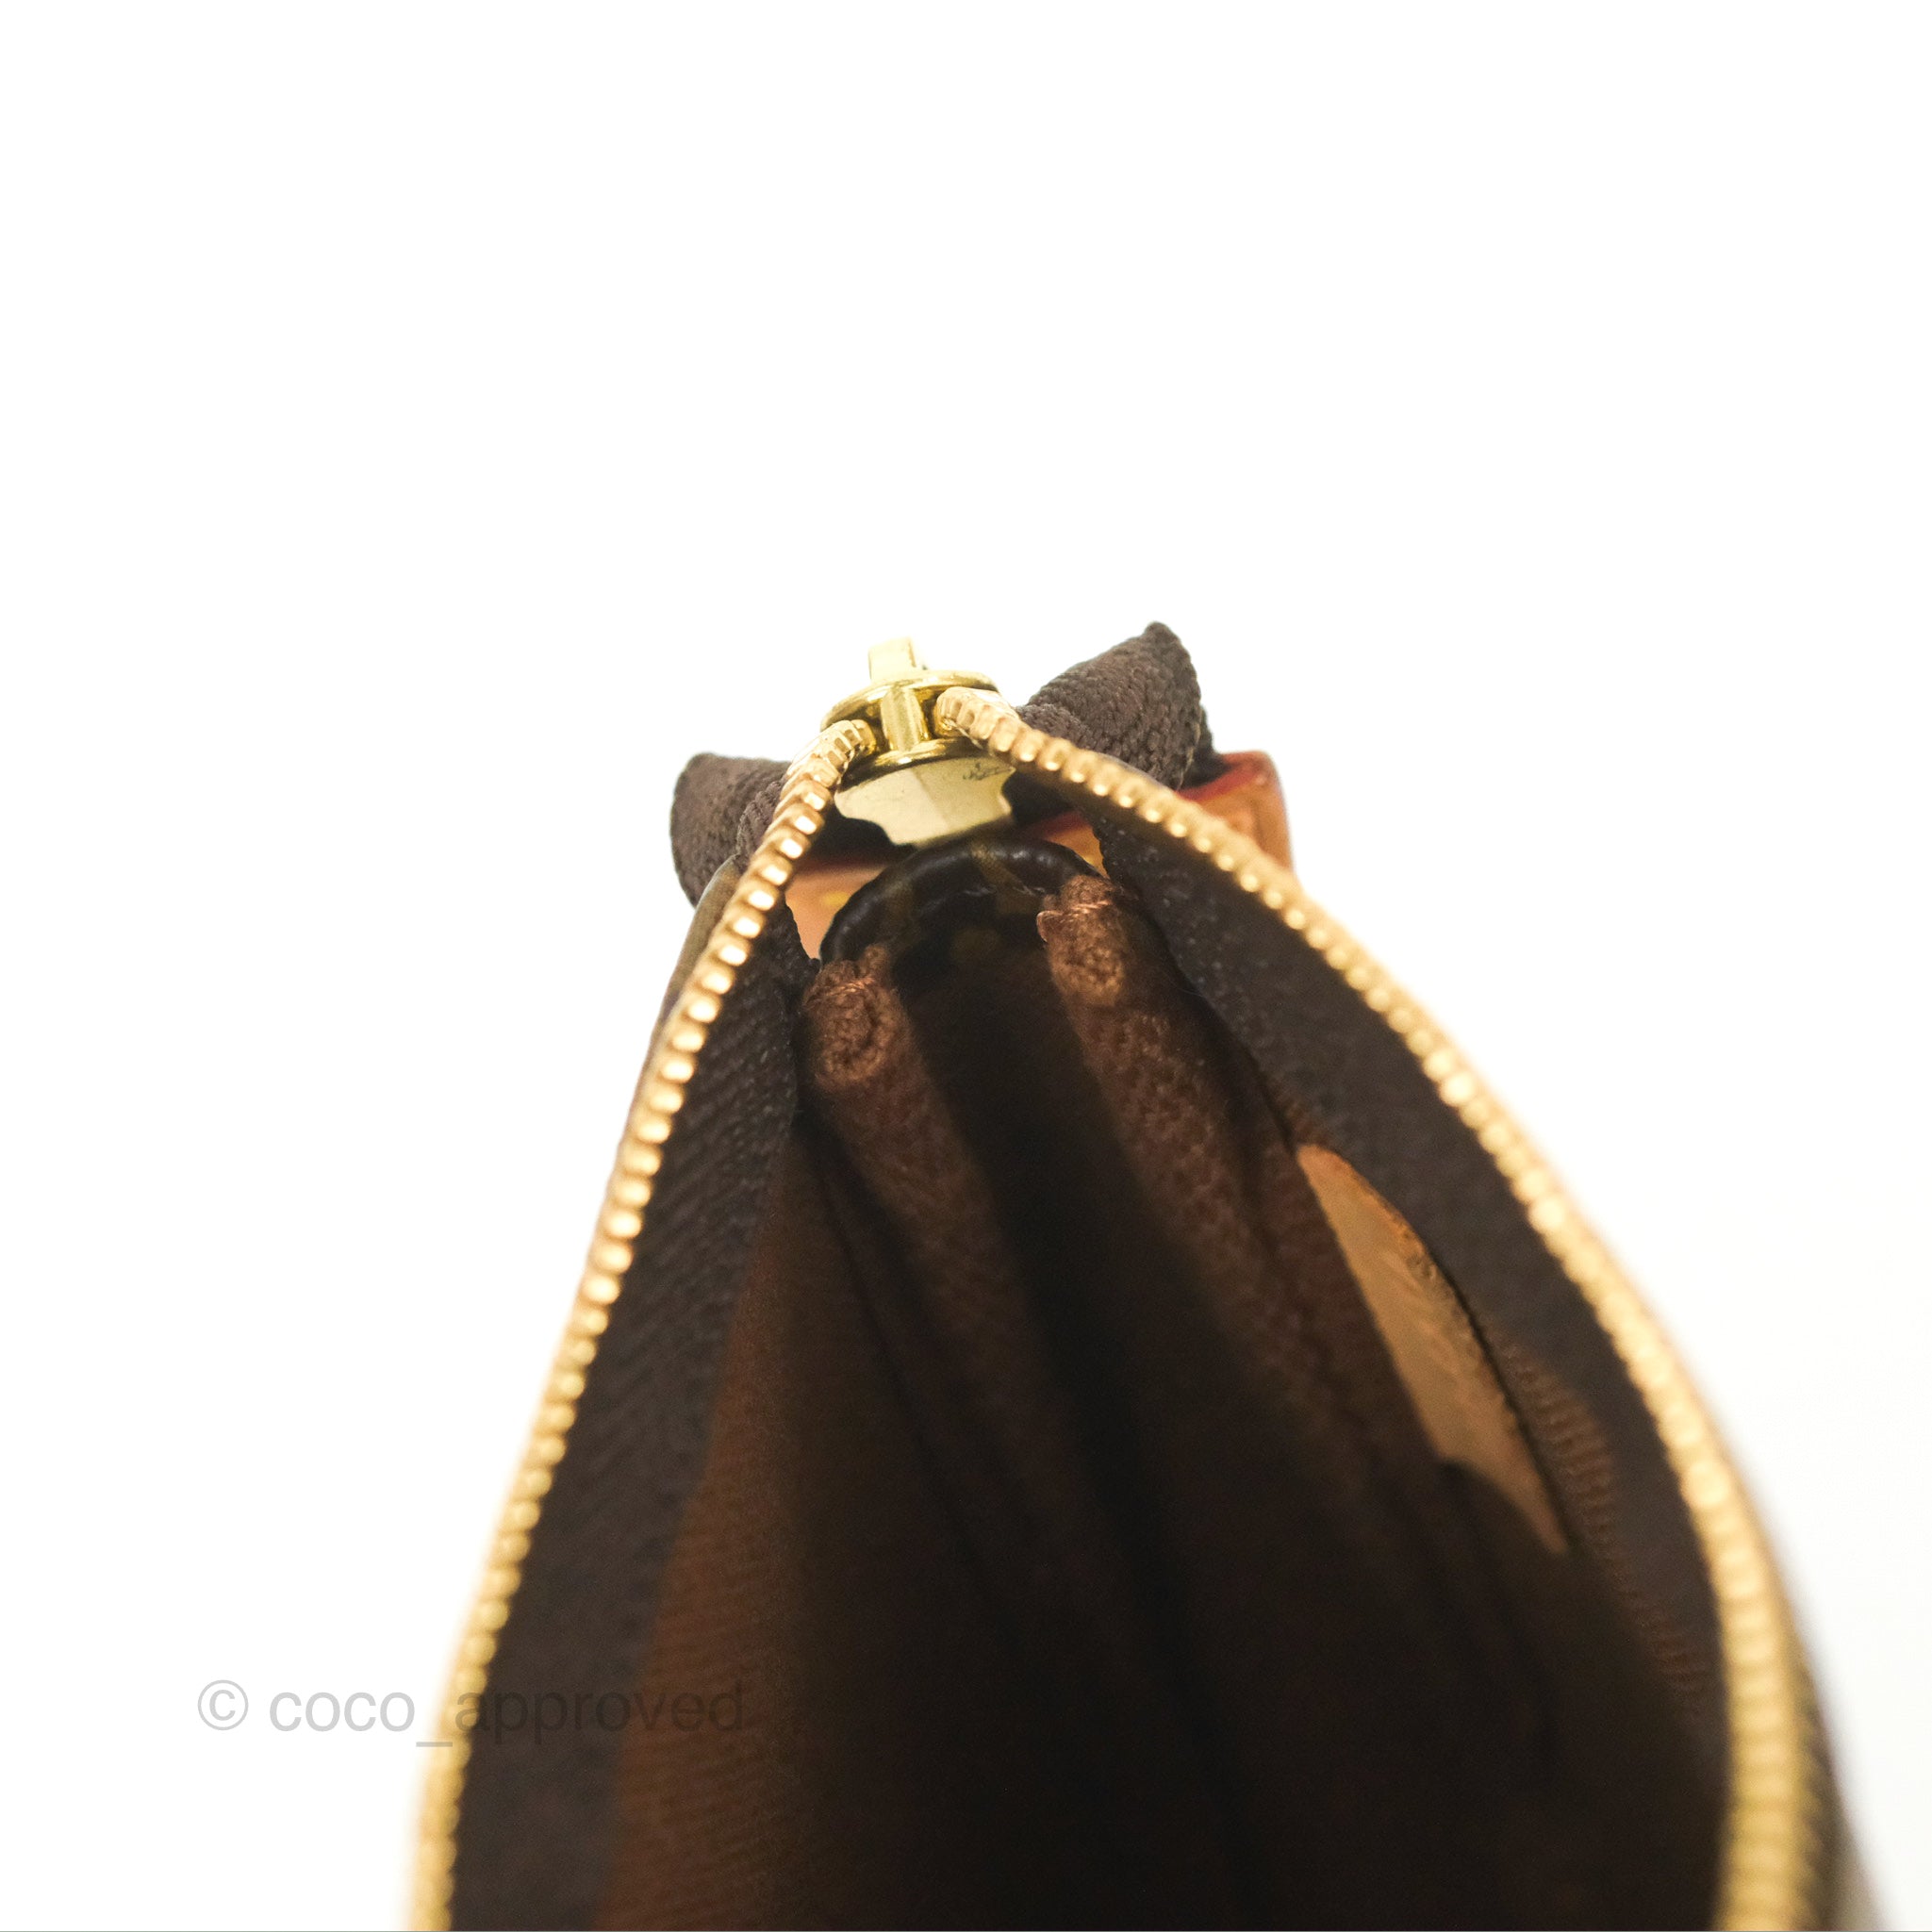 Louis Vuitton Mini Pochette Accessories Monogram Vivienne Venice Chris –  Coco Approved Studio